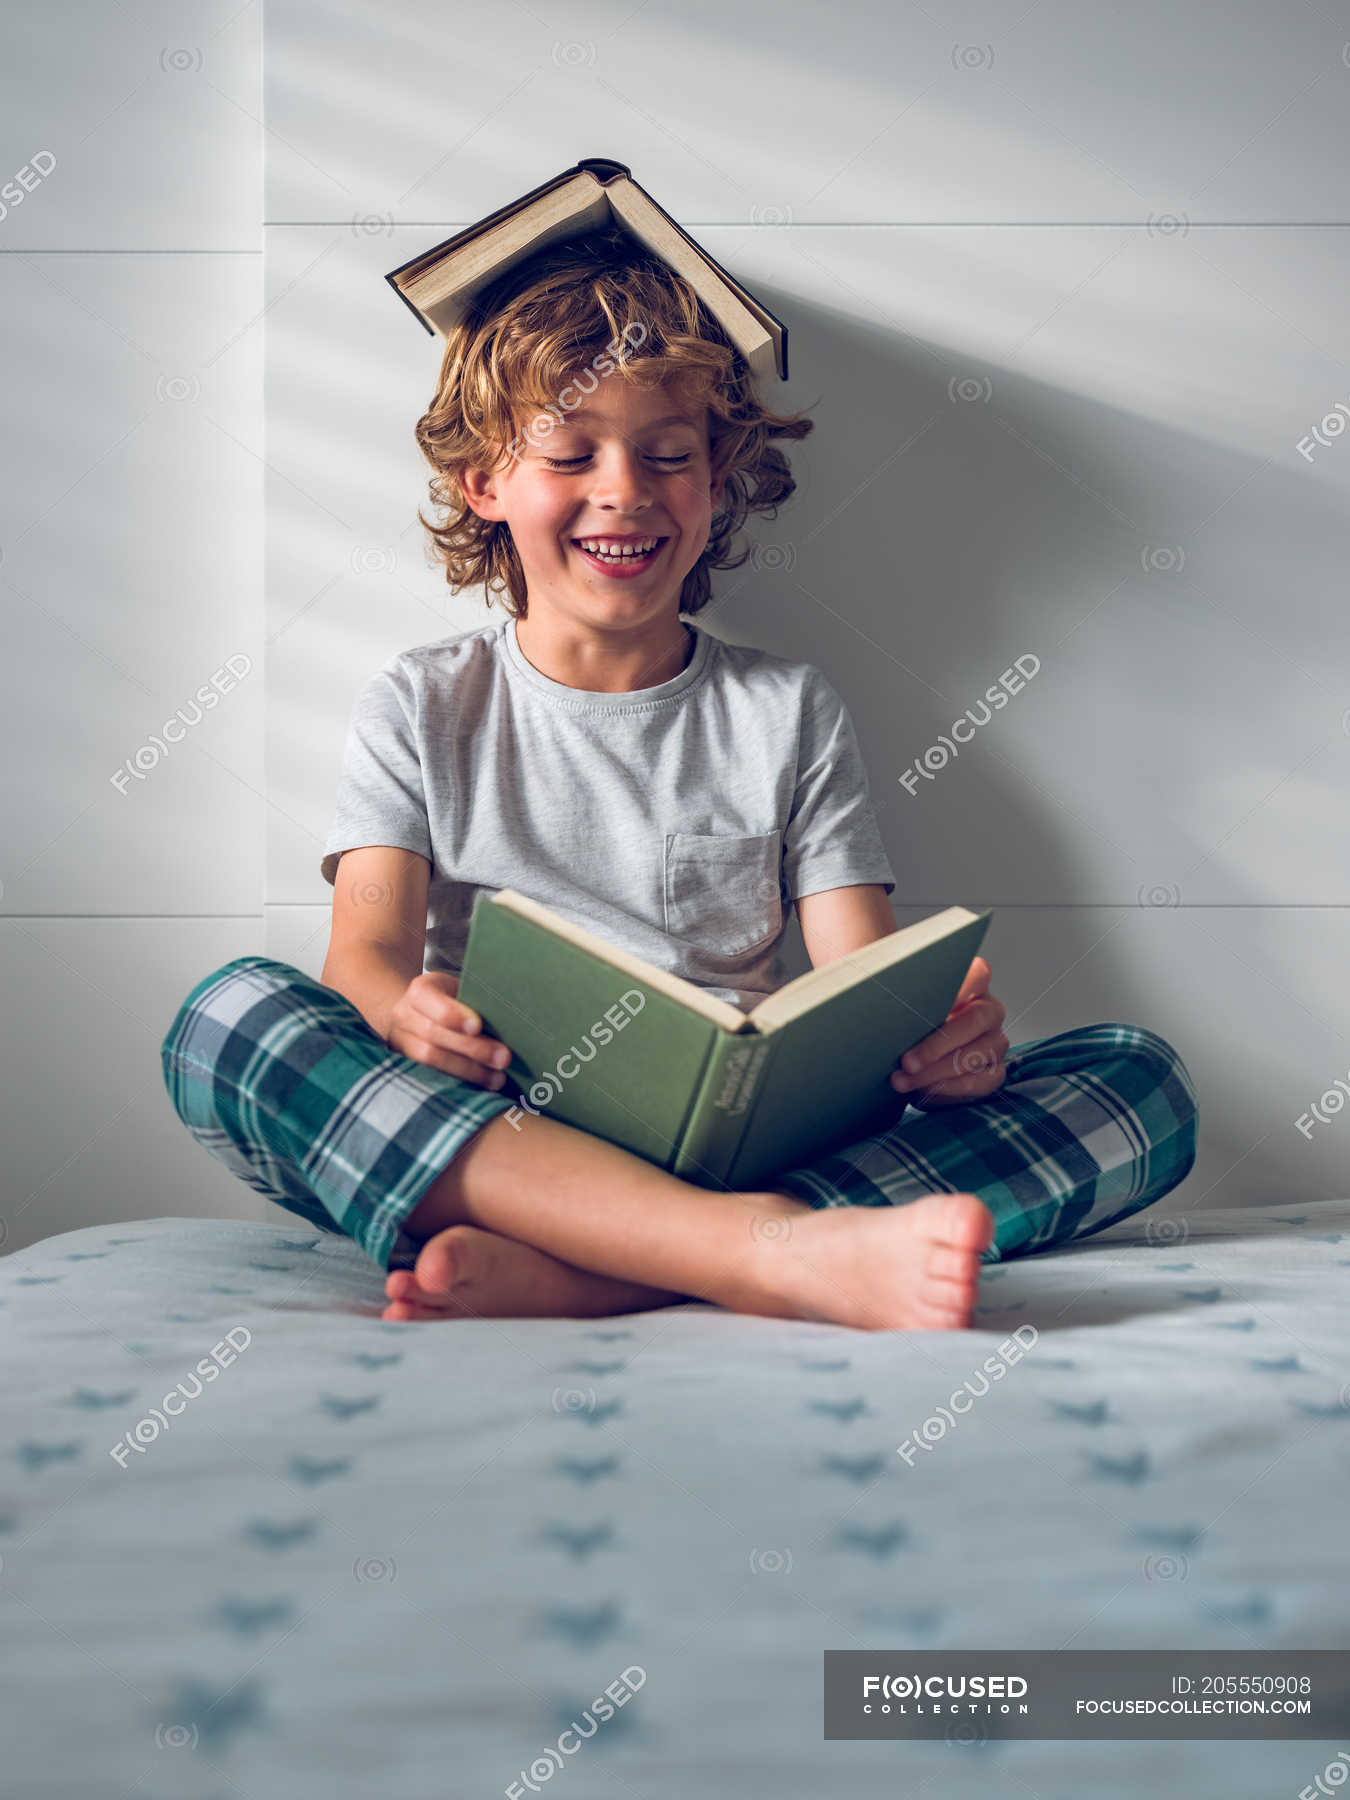 Funny boy reading book — sitting, calm - Stock Photo | #205550908